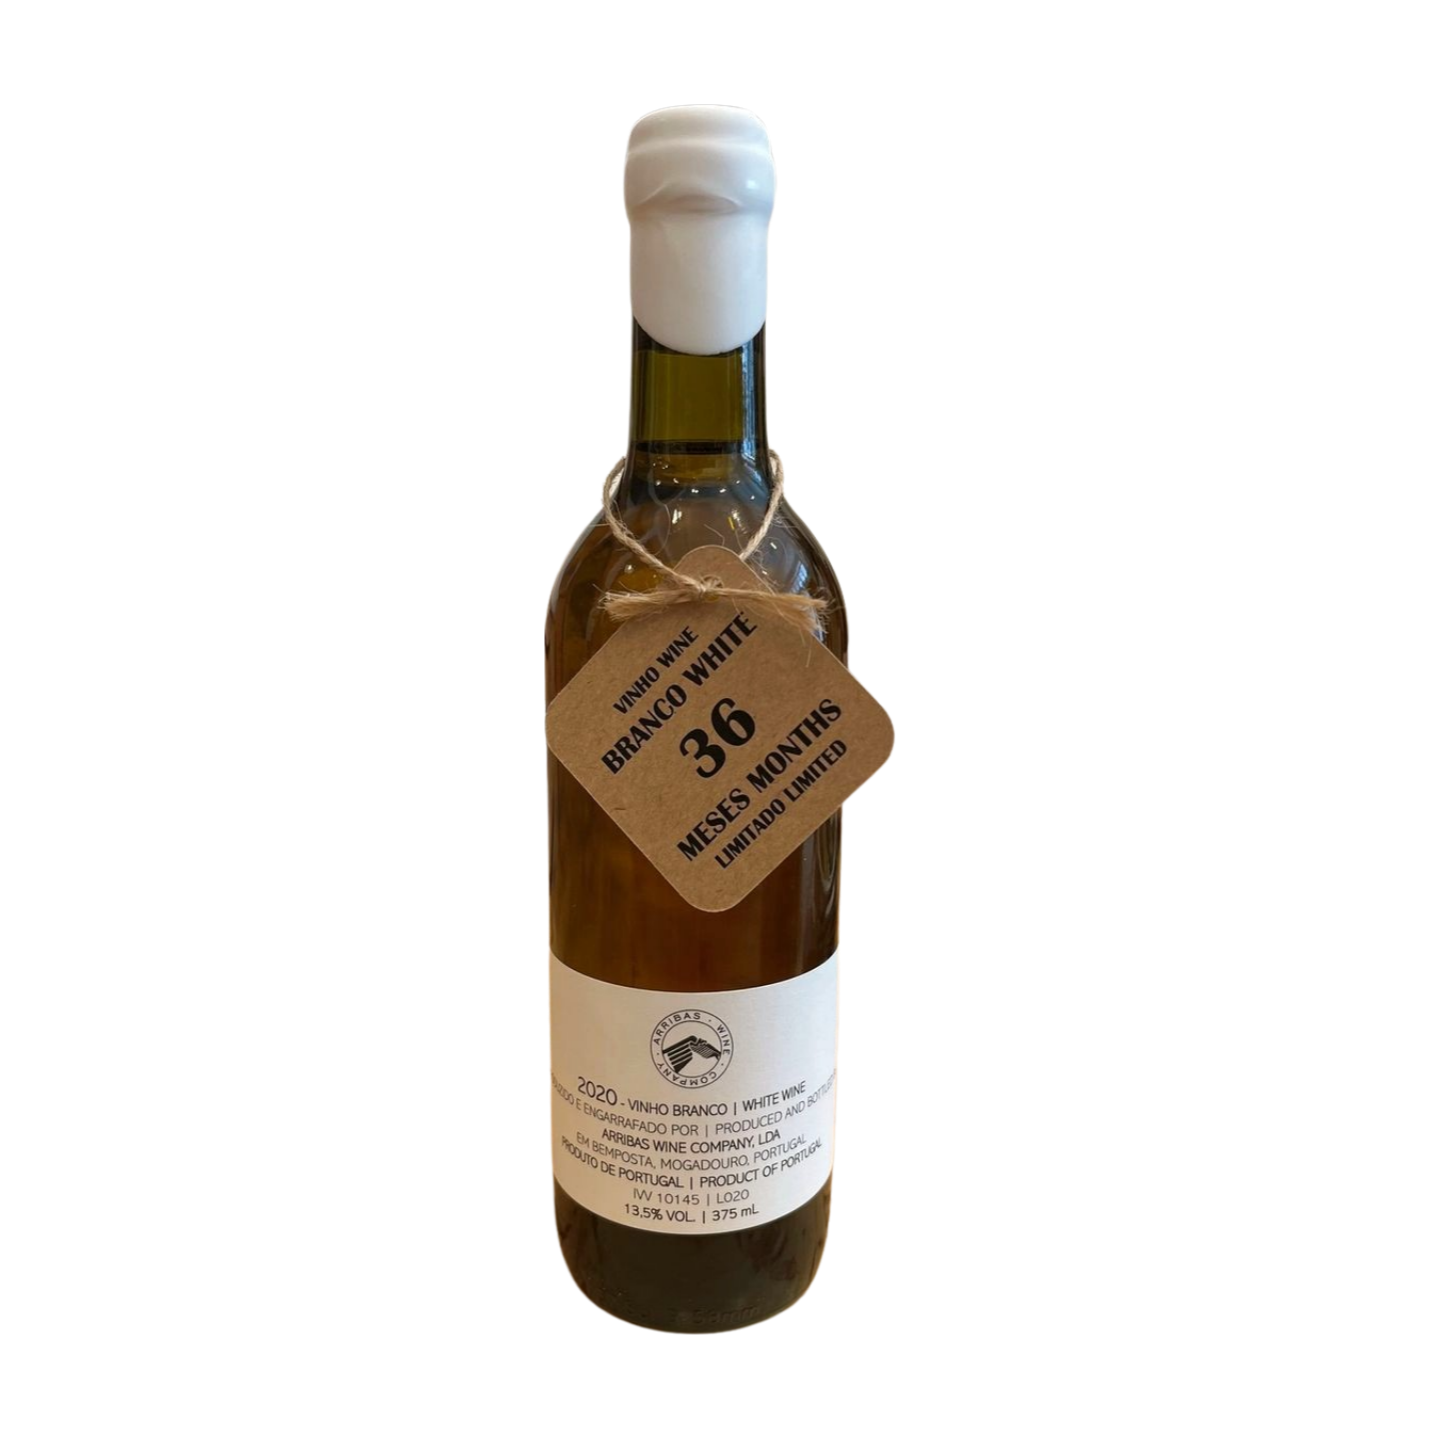 Arribas Wine Company - 2020 - Branco Maceração 375ml